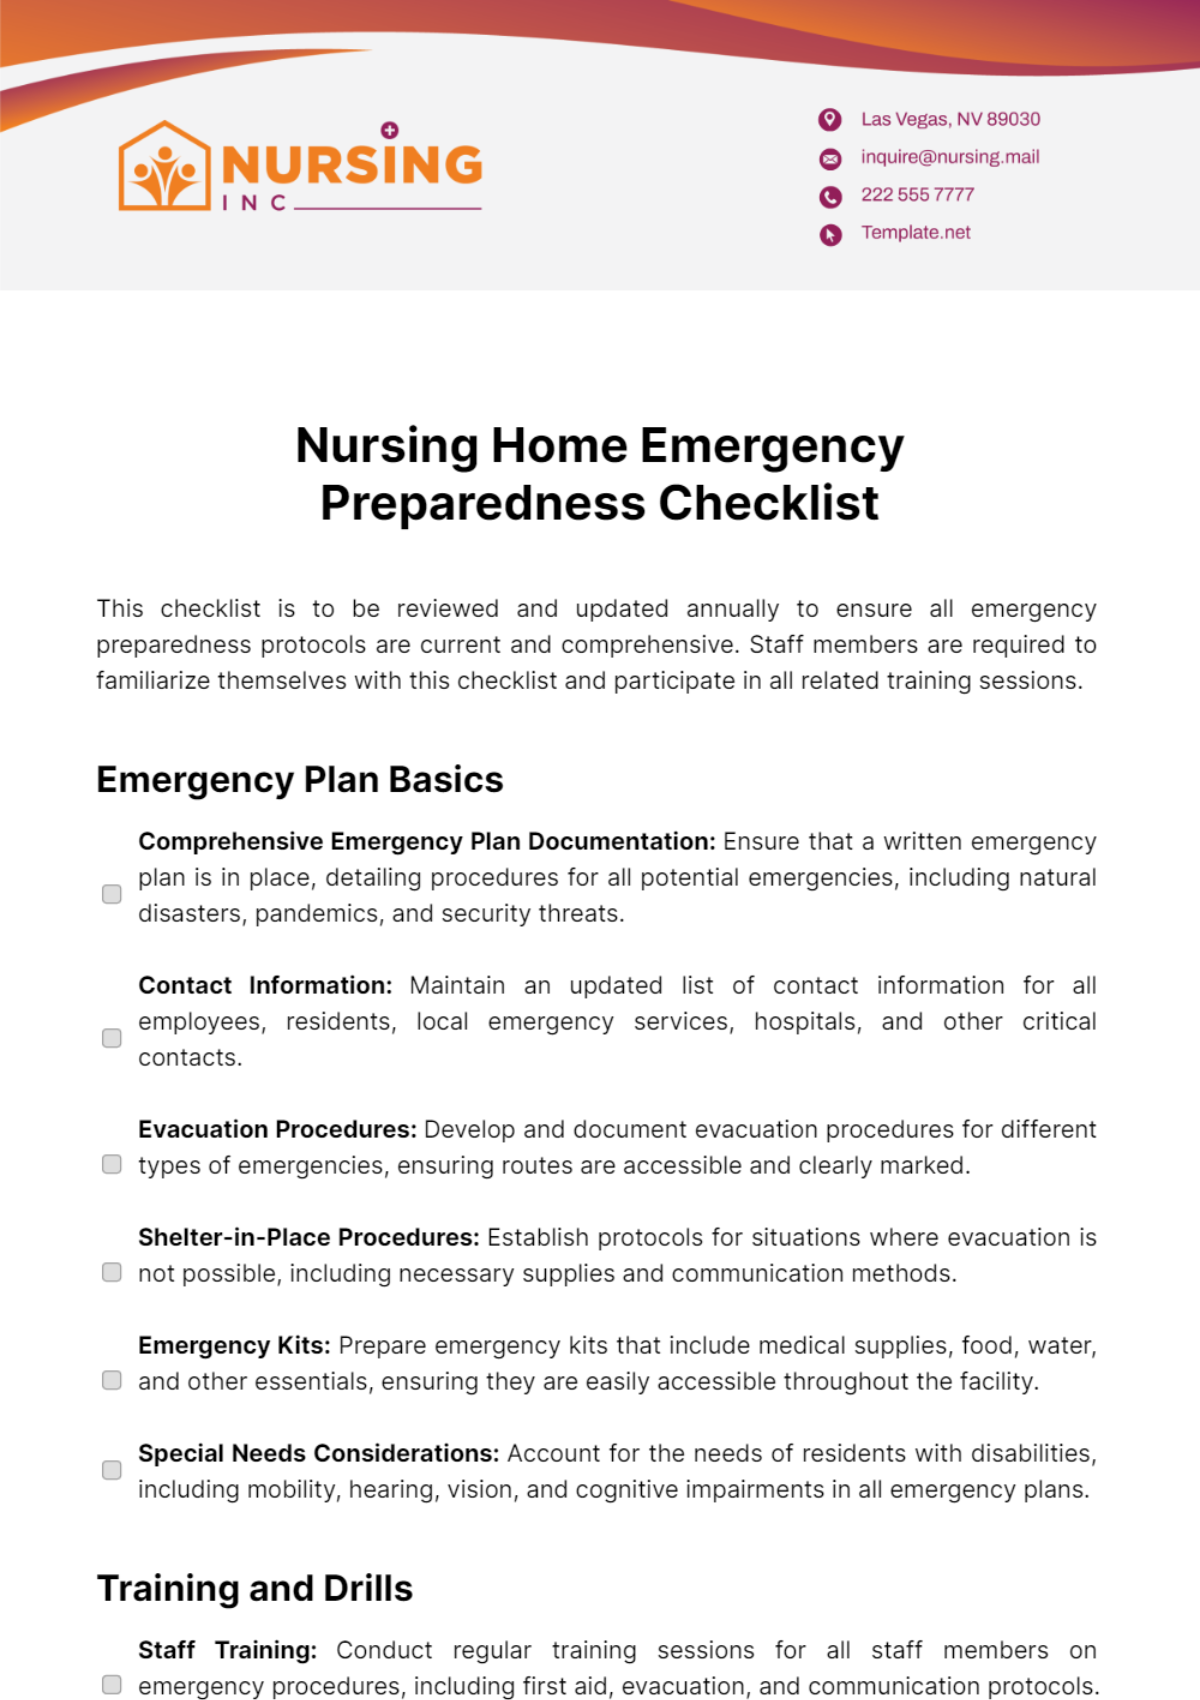 Nursing Home Emergency Preparedness Checklist Template